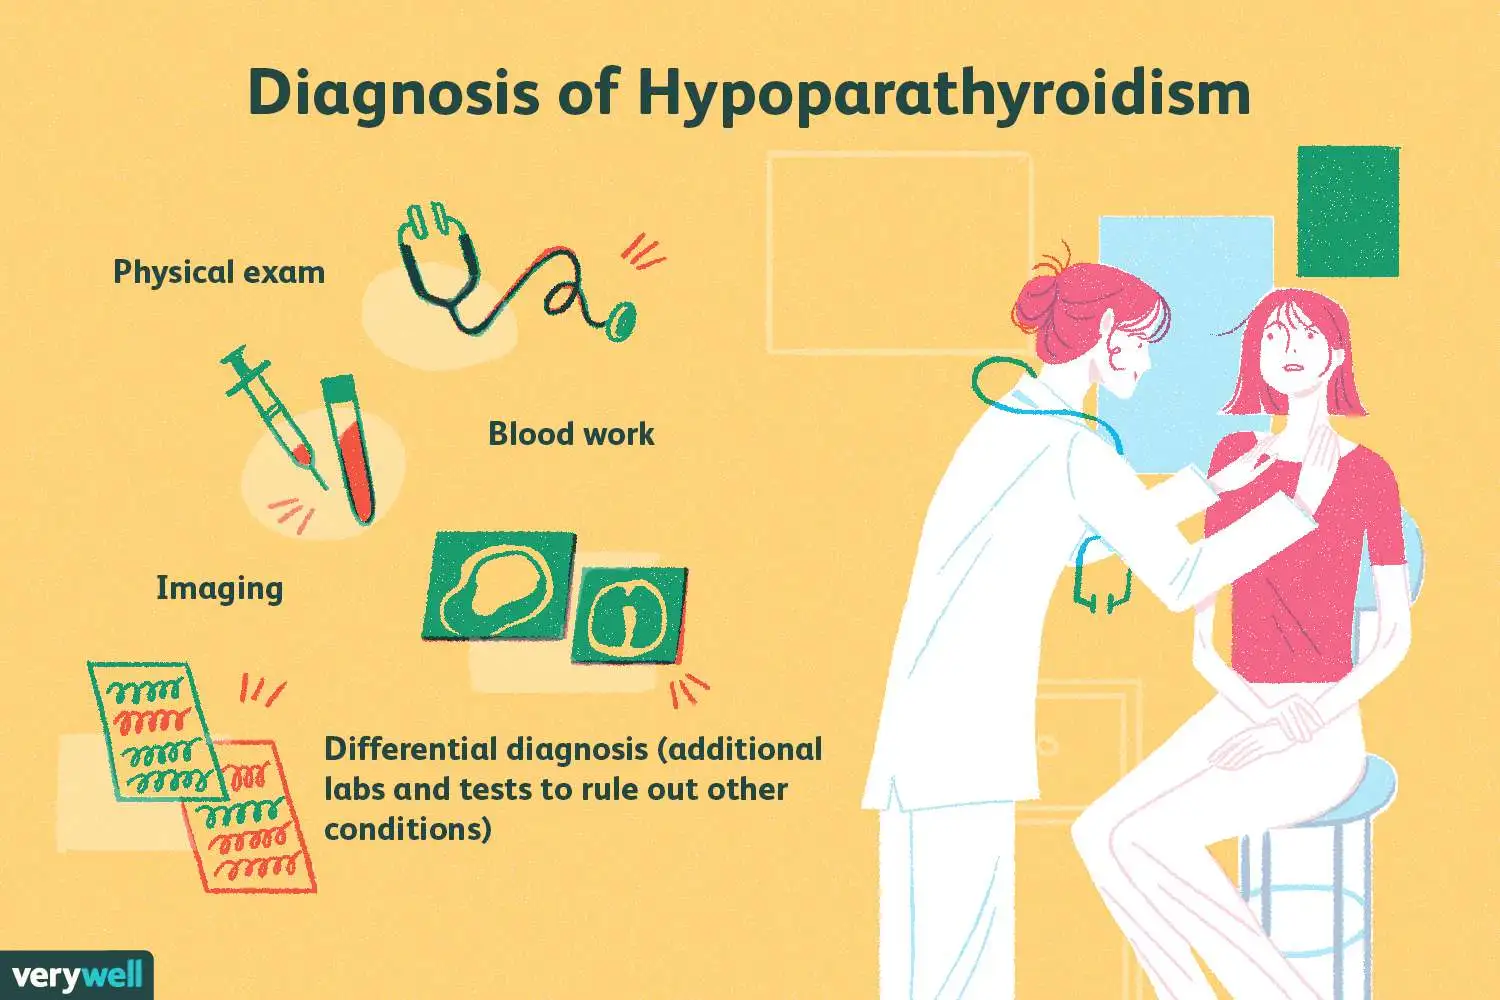 How do I know if I have Hyperparathyroidism